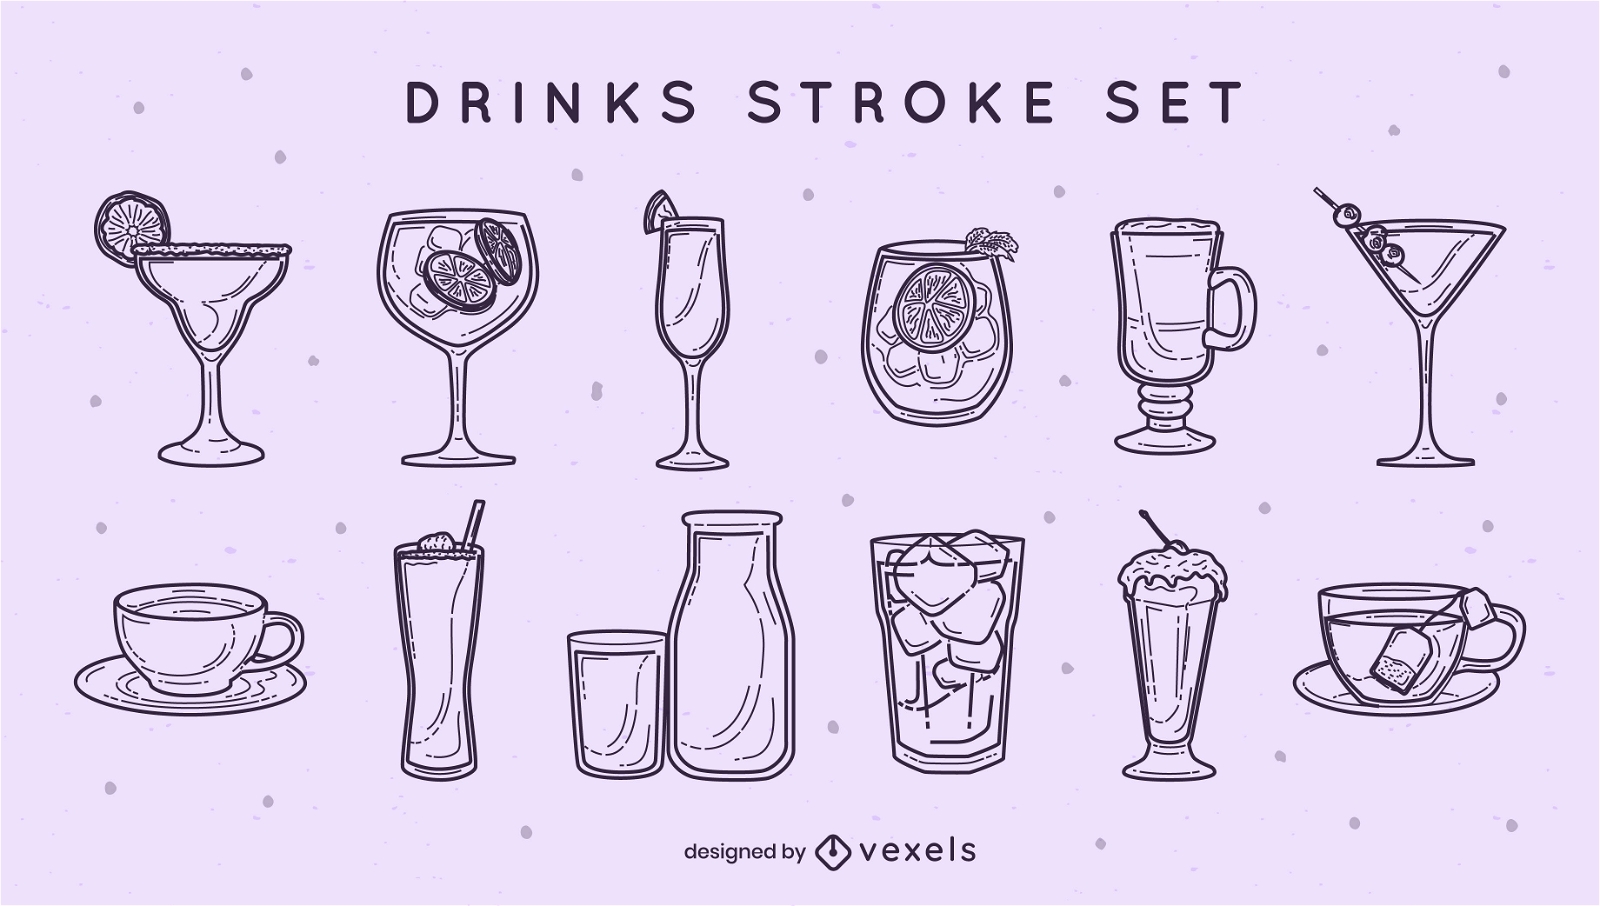 Cocktails and soft drinks stroke set